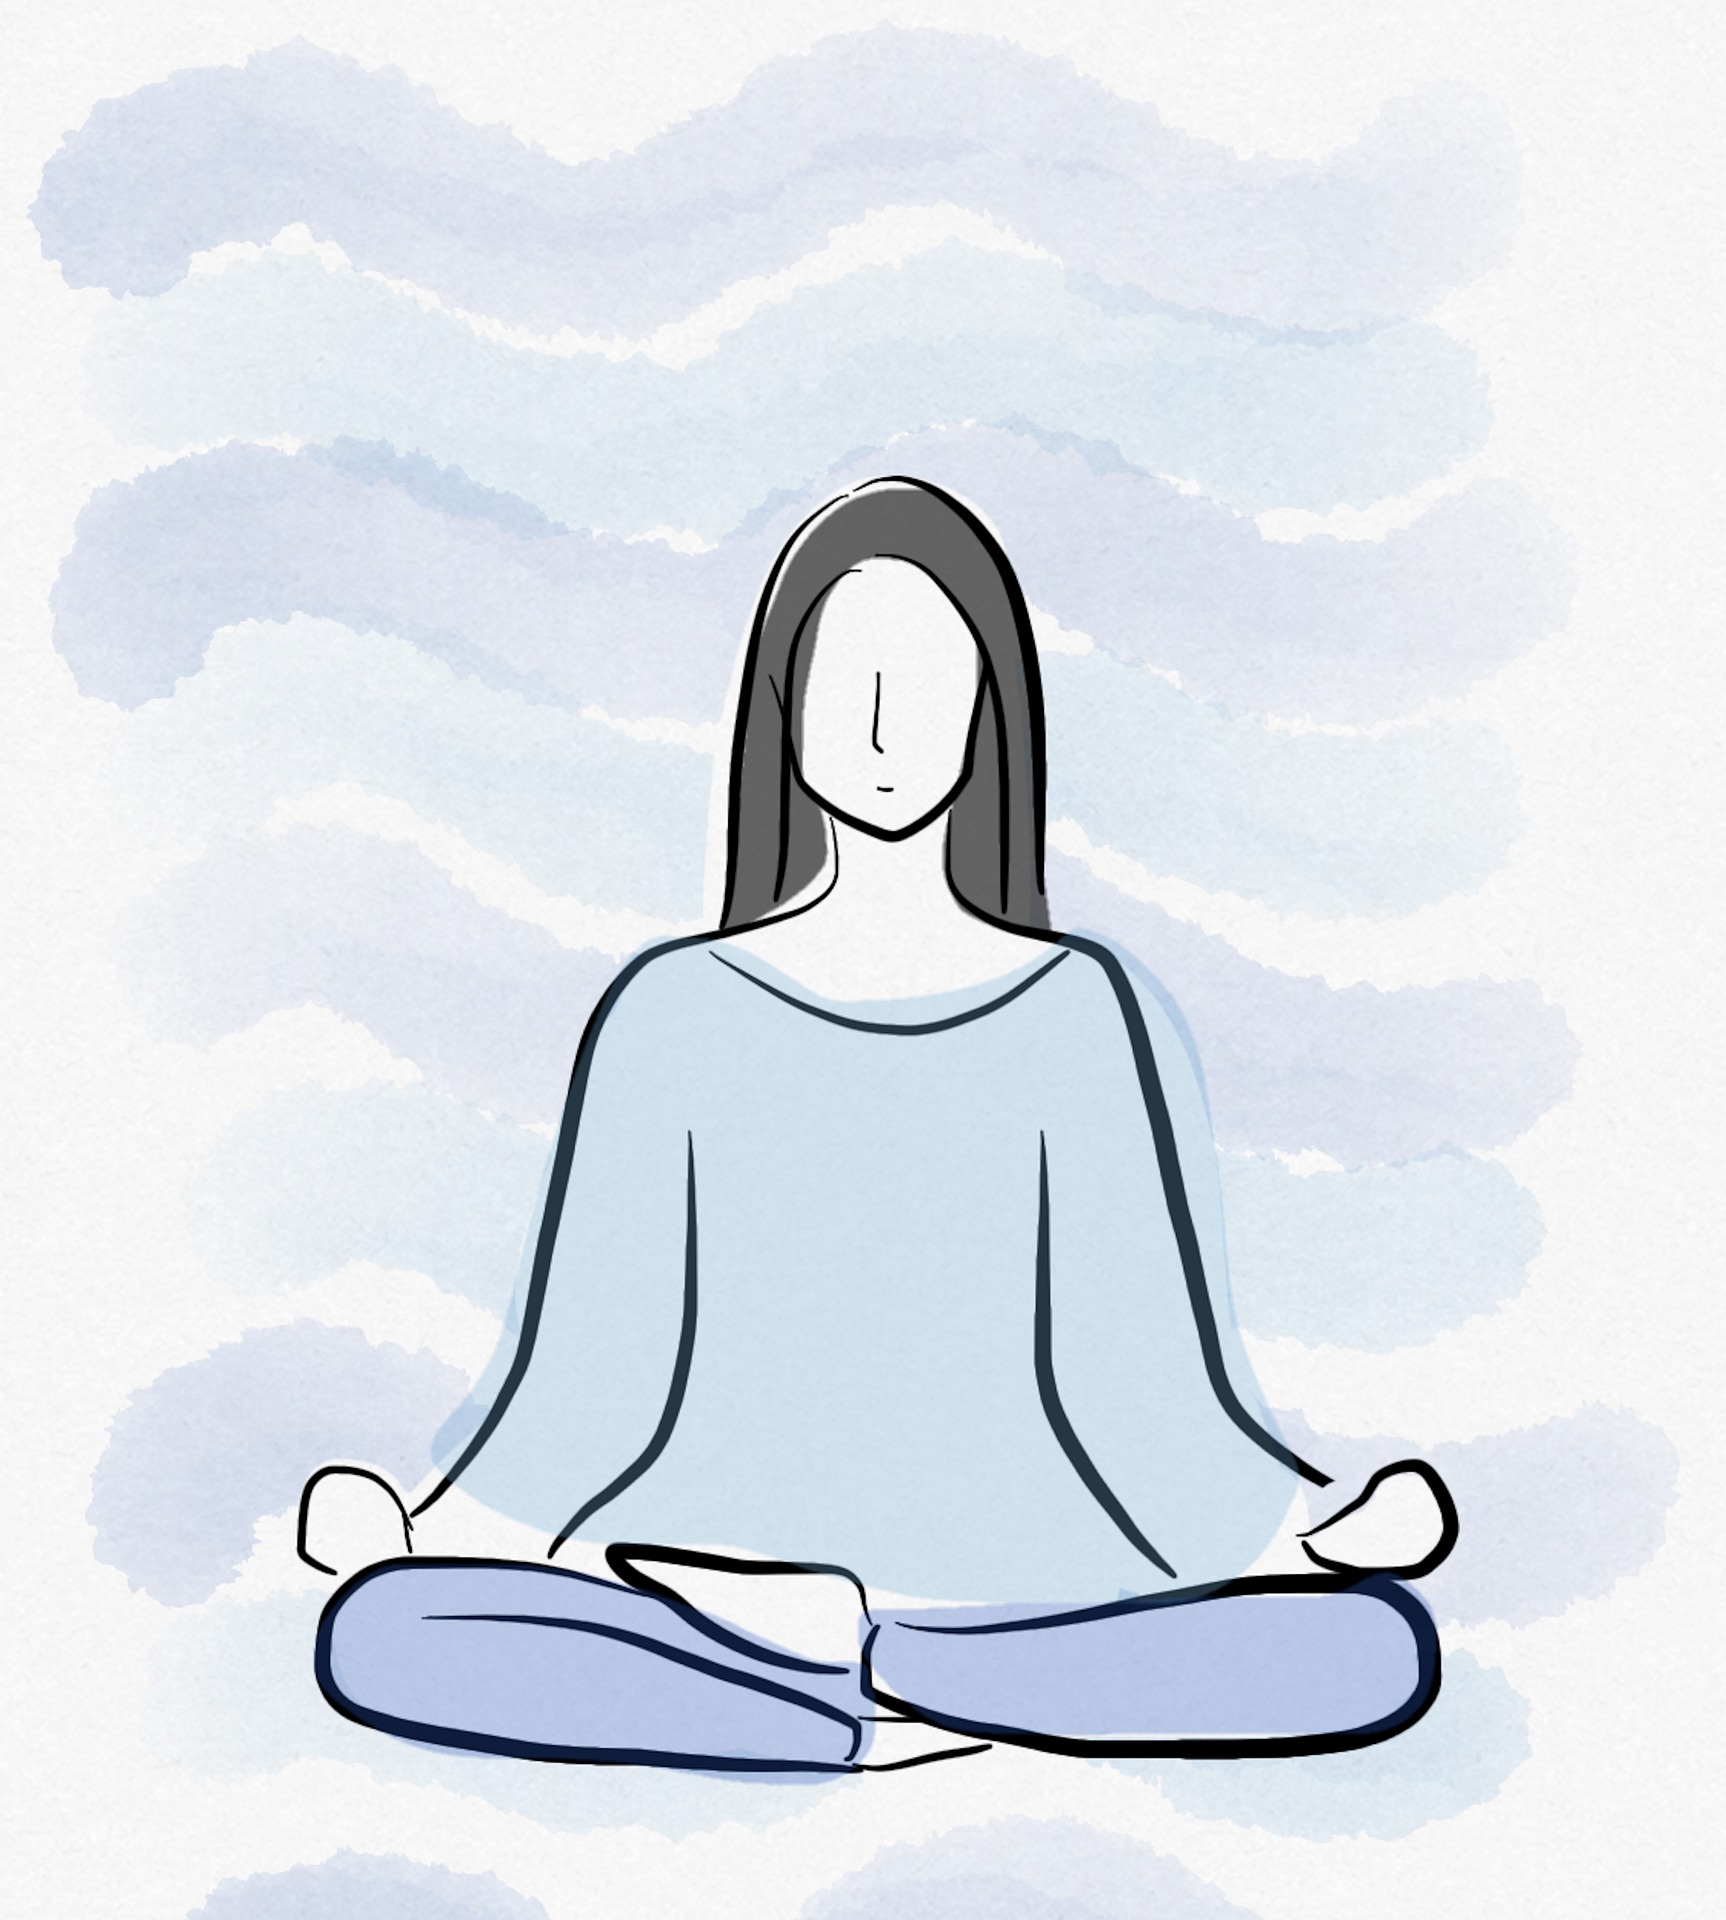 The Benefits of Meditation